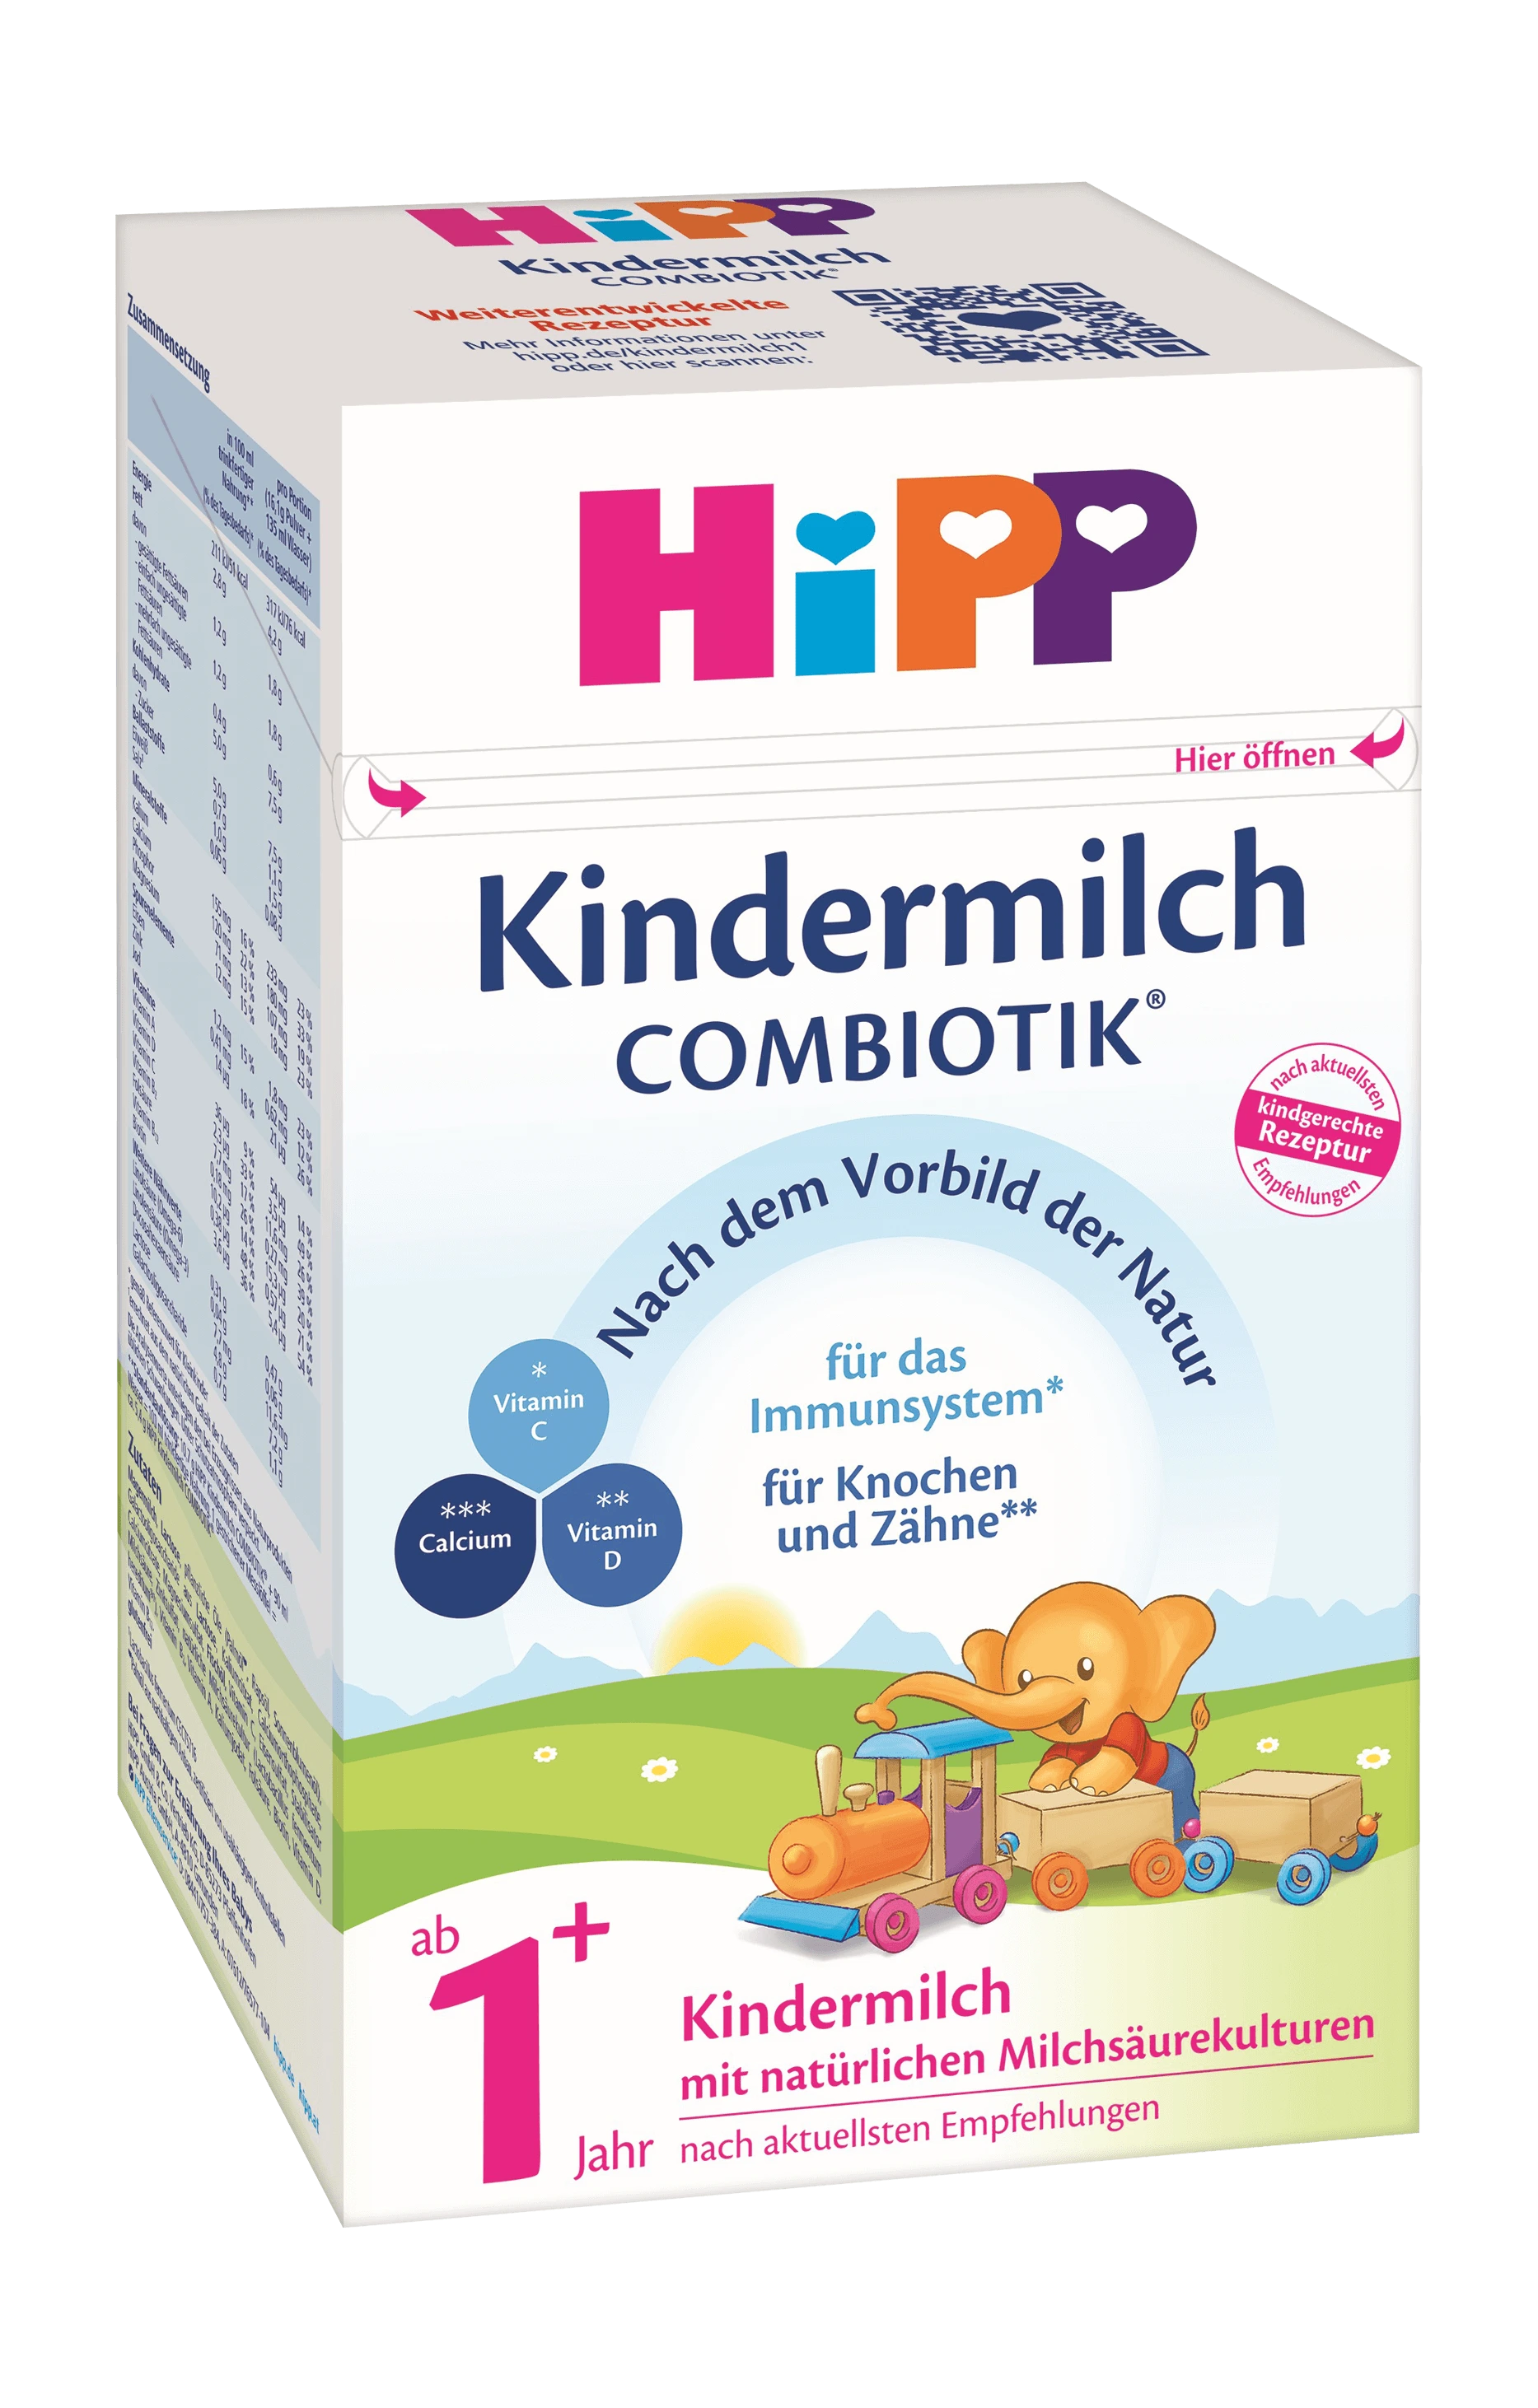 HiPP Kindermilch Combiotik ab 1+ Jahr, 600 g